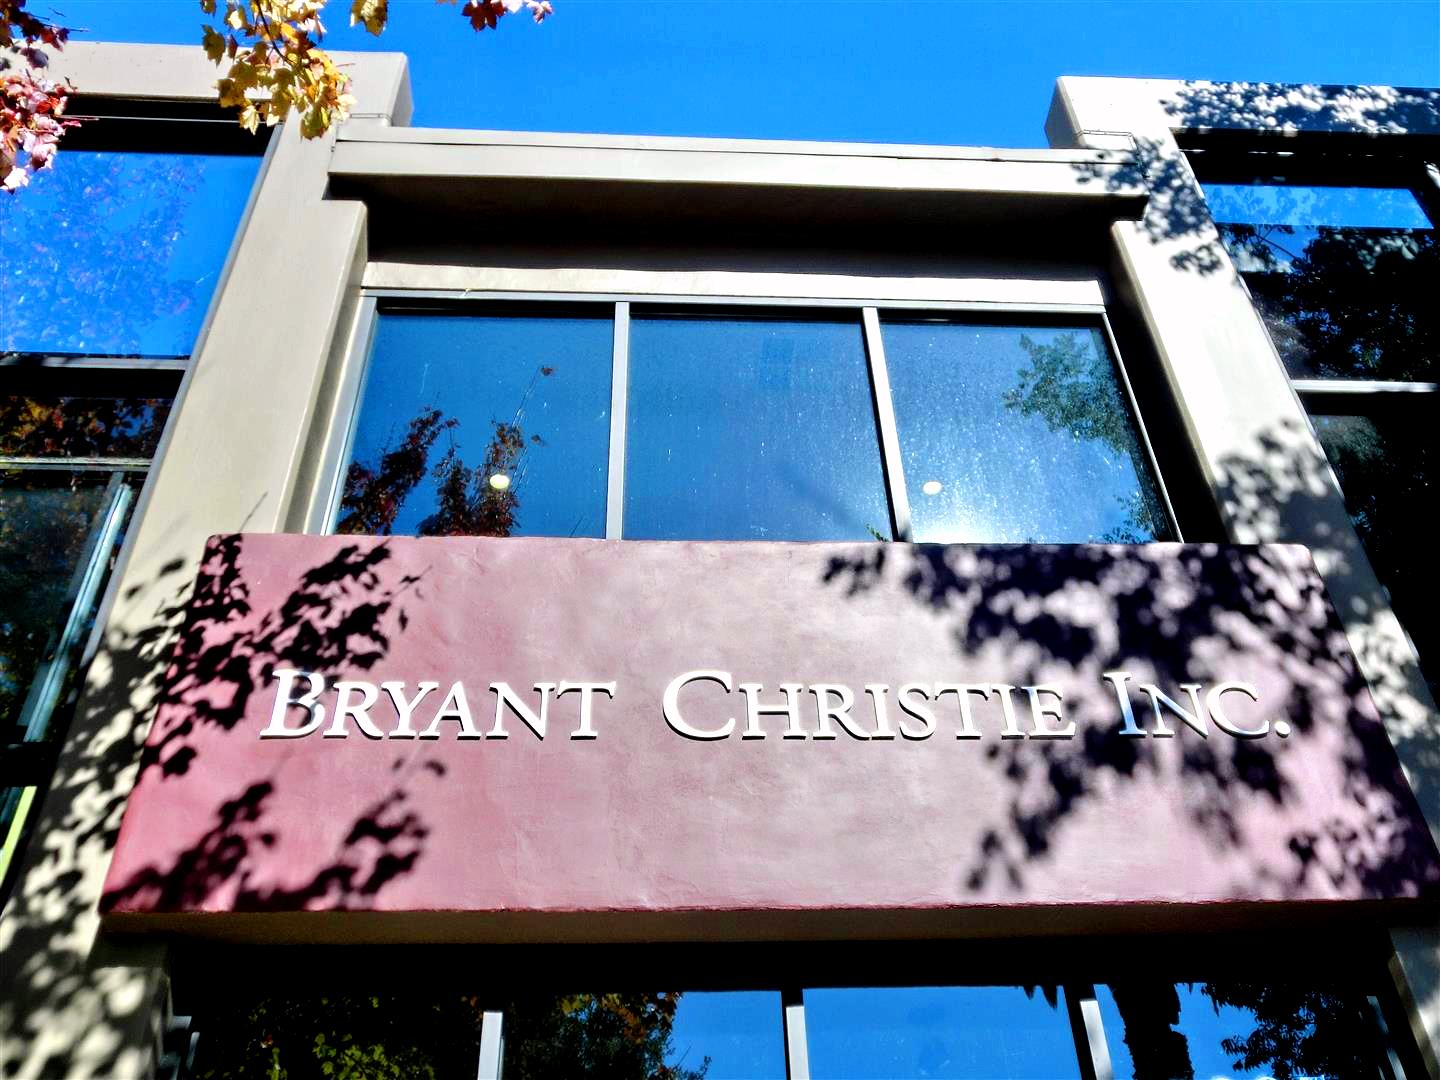 Bryant Christie Inc Signange